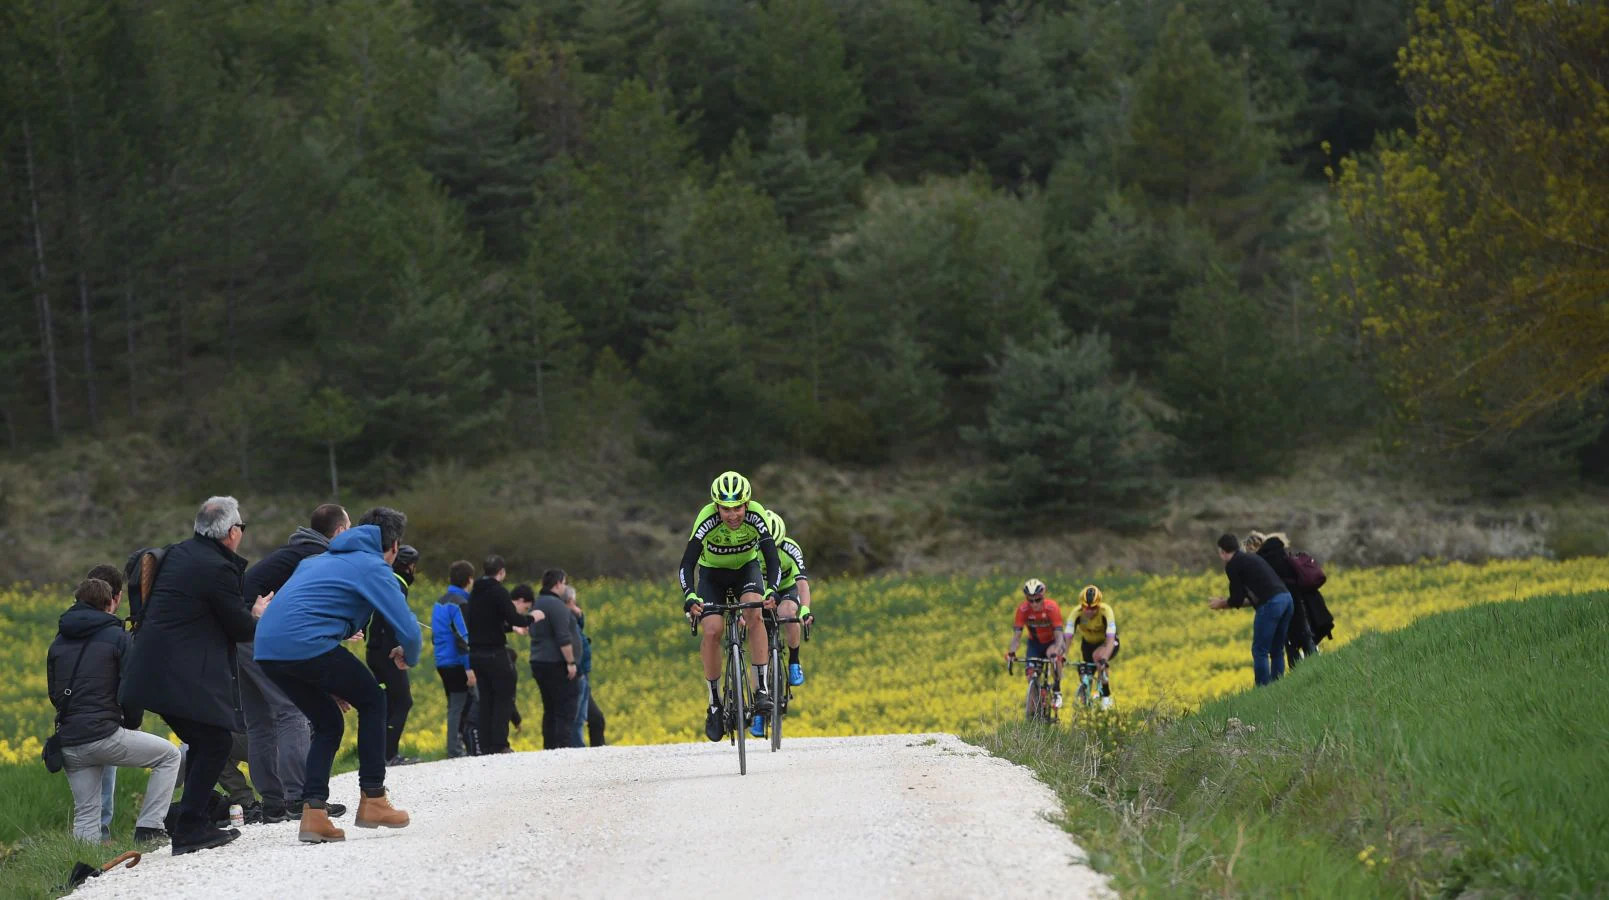 El francés del Quick-Step Julian Alaphilippe ha sido el vencedor de la segunda etapa de la Vuelta al País Vasco que ha transcurrido entre Zumarraga y Gorraitz.